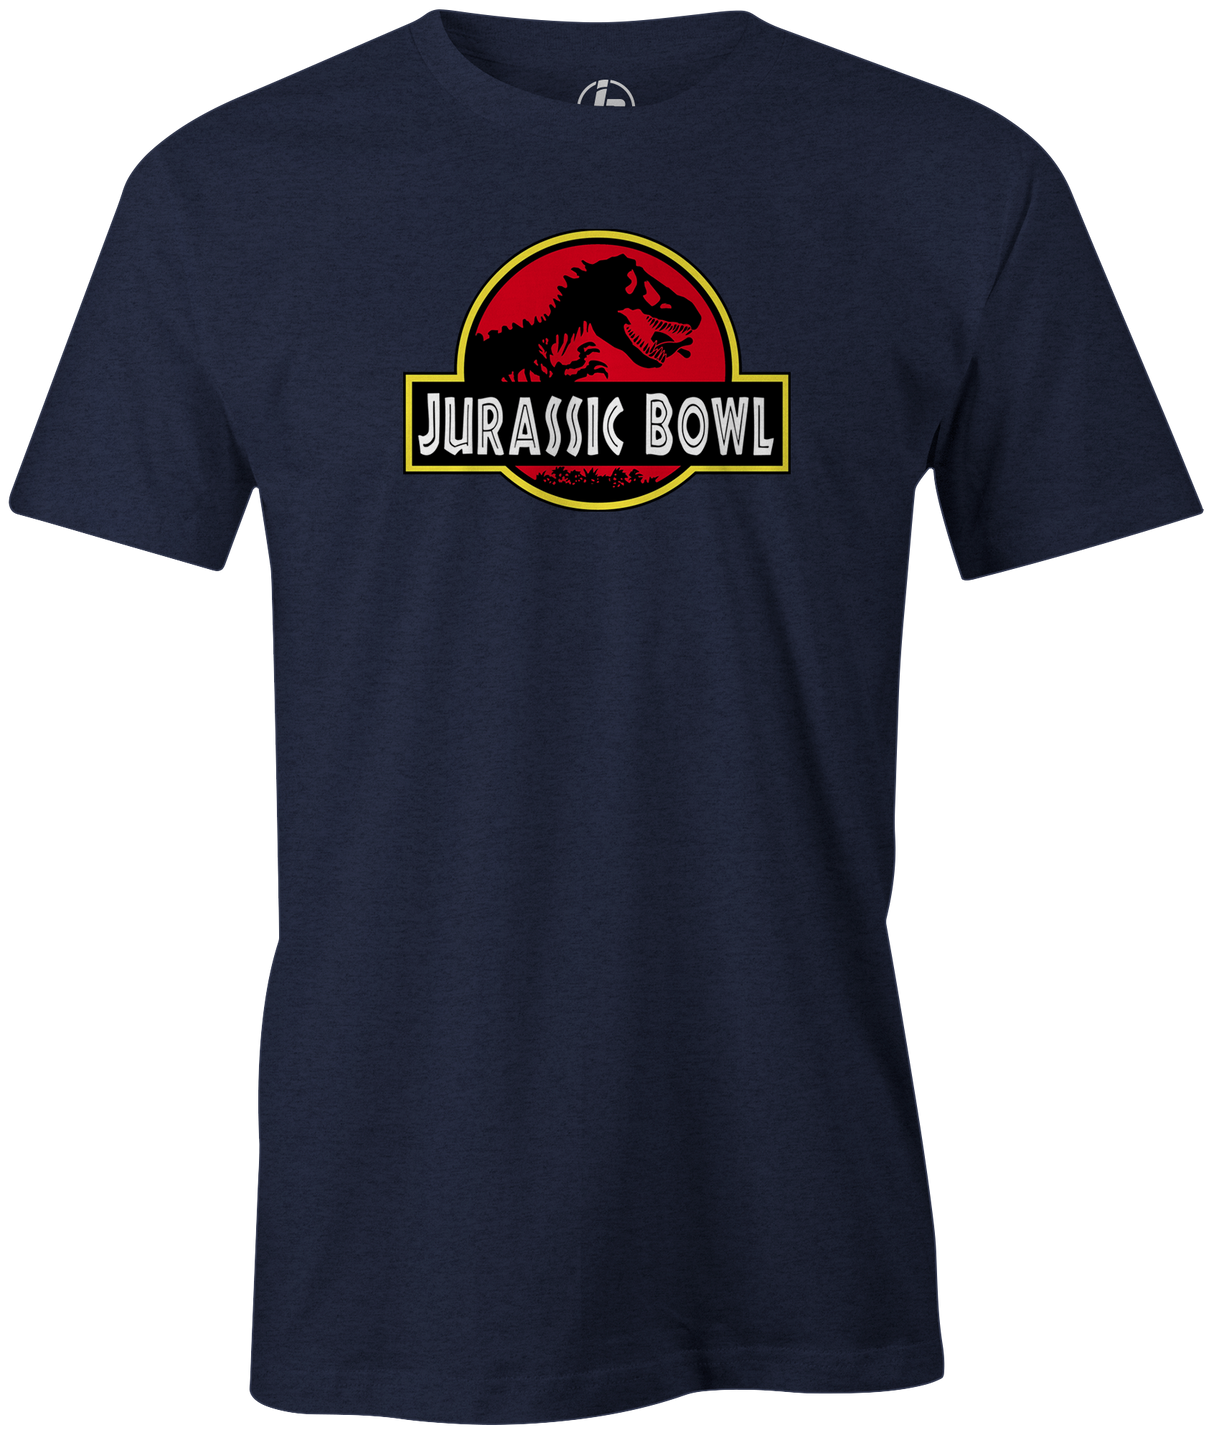 Jurassic Bowl Navy T-Shirt, Red, bowling, funny, cool, vintage, novelty, movie, Jurassic Park, league bowling team shirt, tournament shirt, dinosaurs.